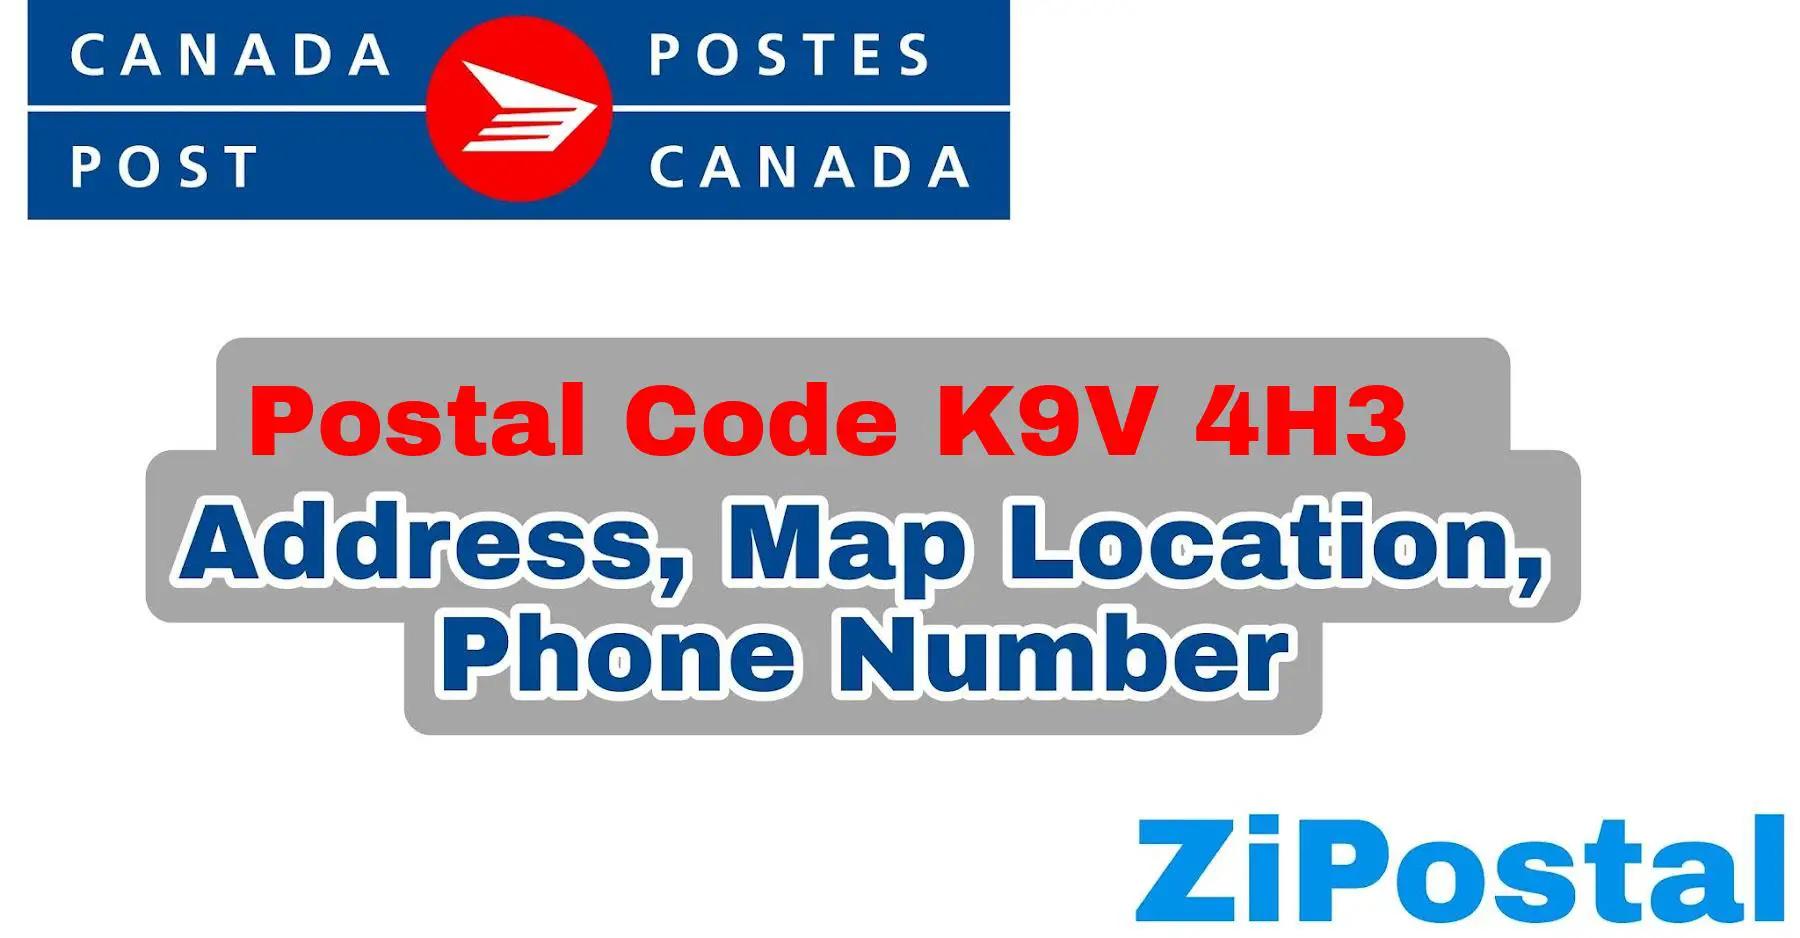 Postal Code K9V 4H3 Address Map Location and Phone Number